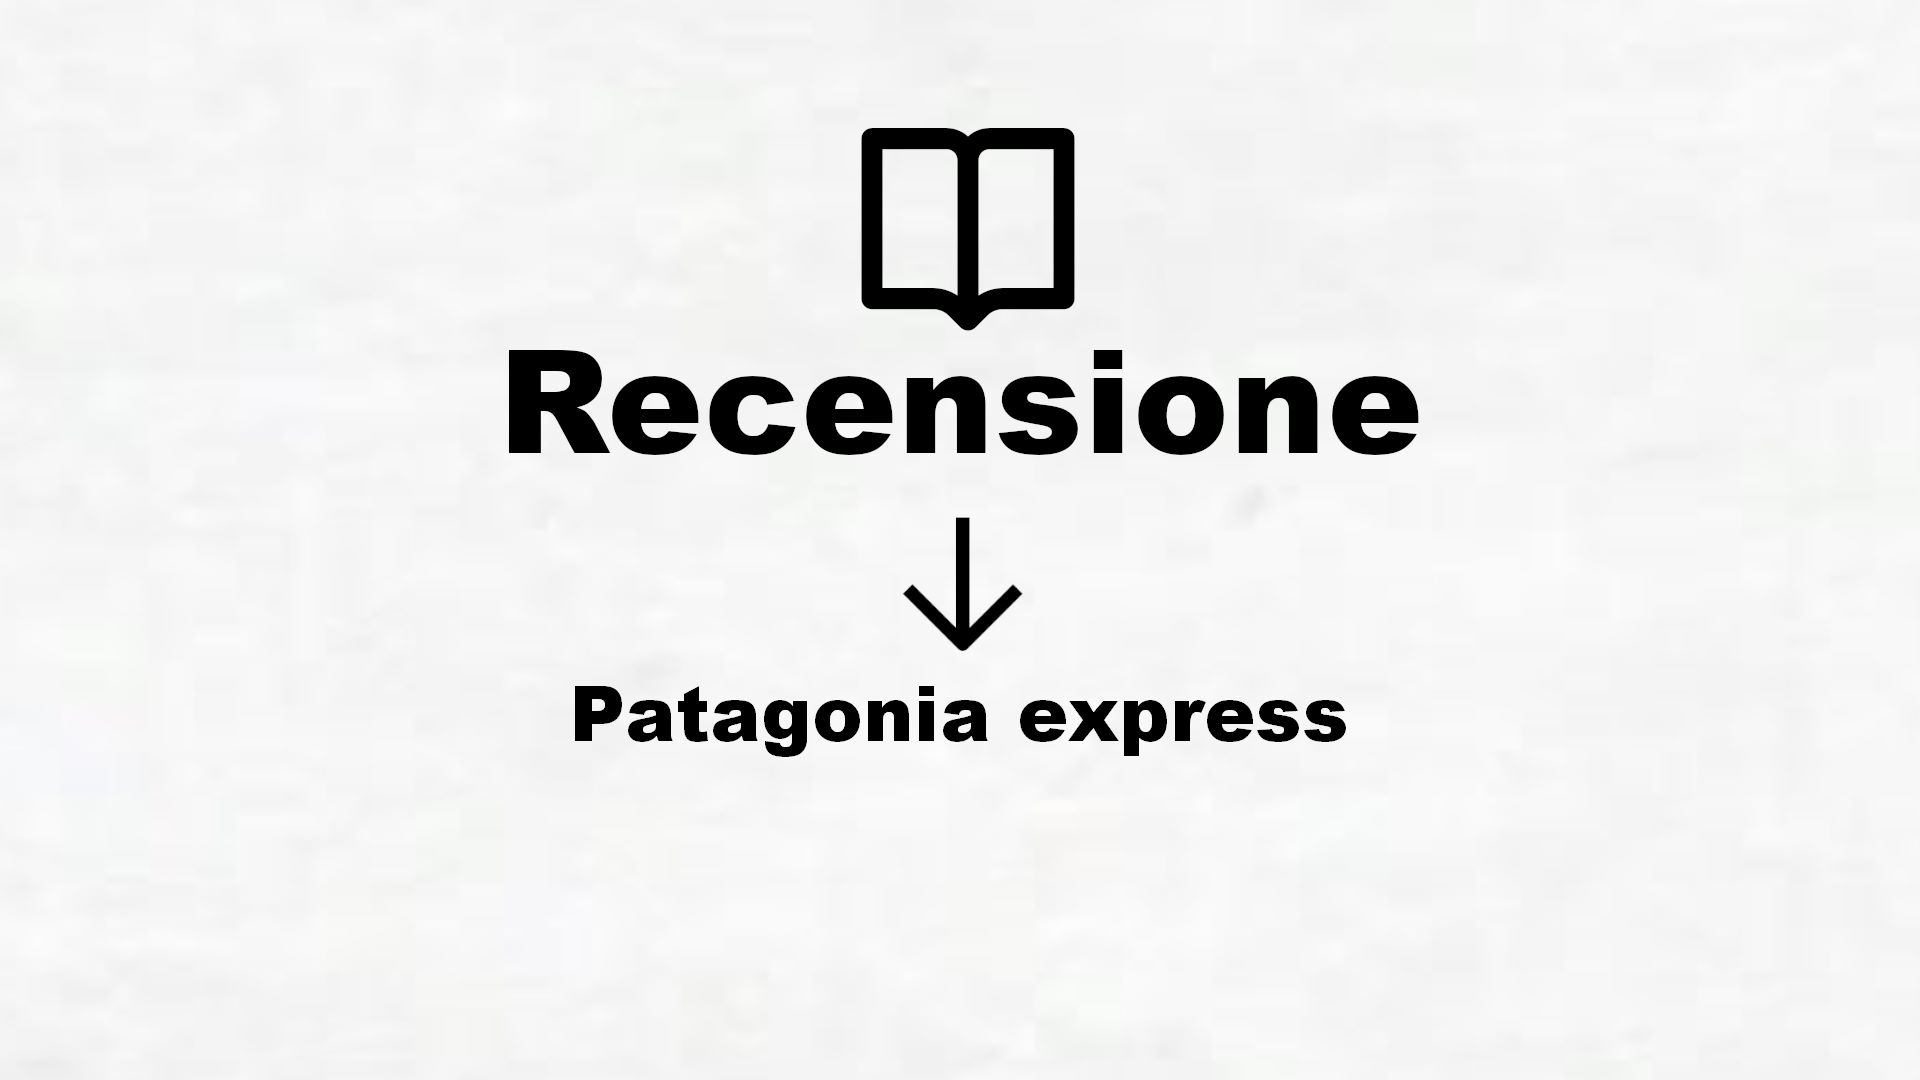 Patagonia express – Recensione Libro